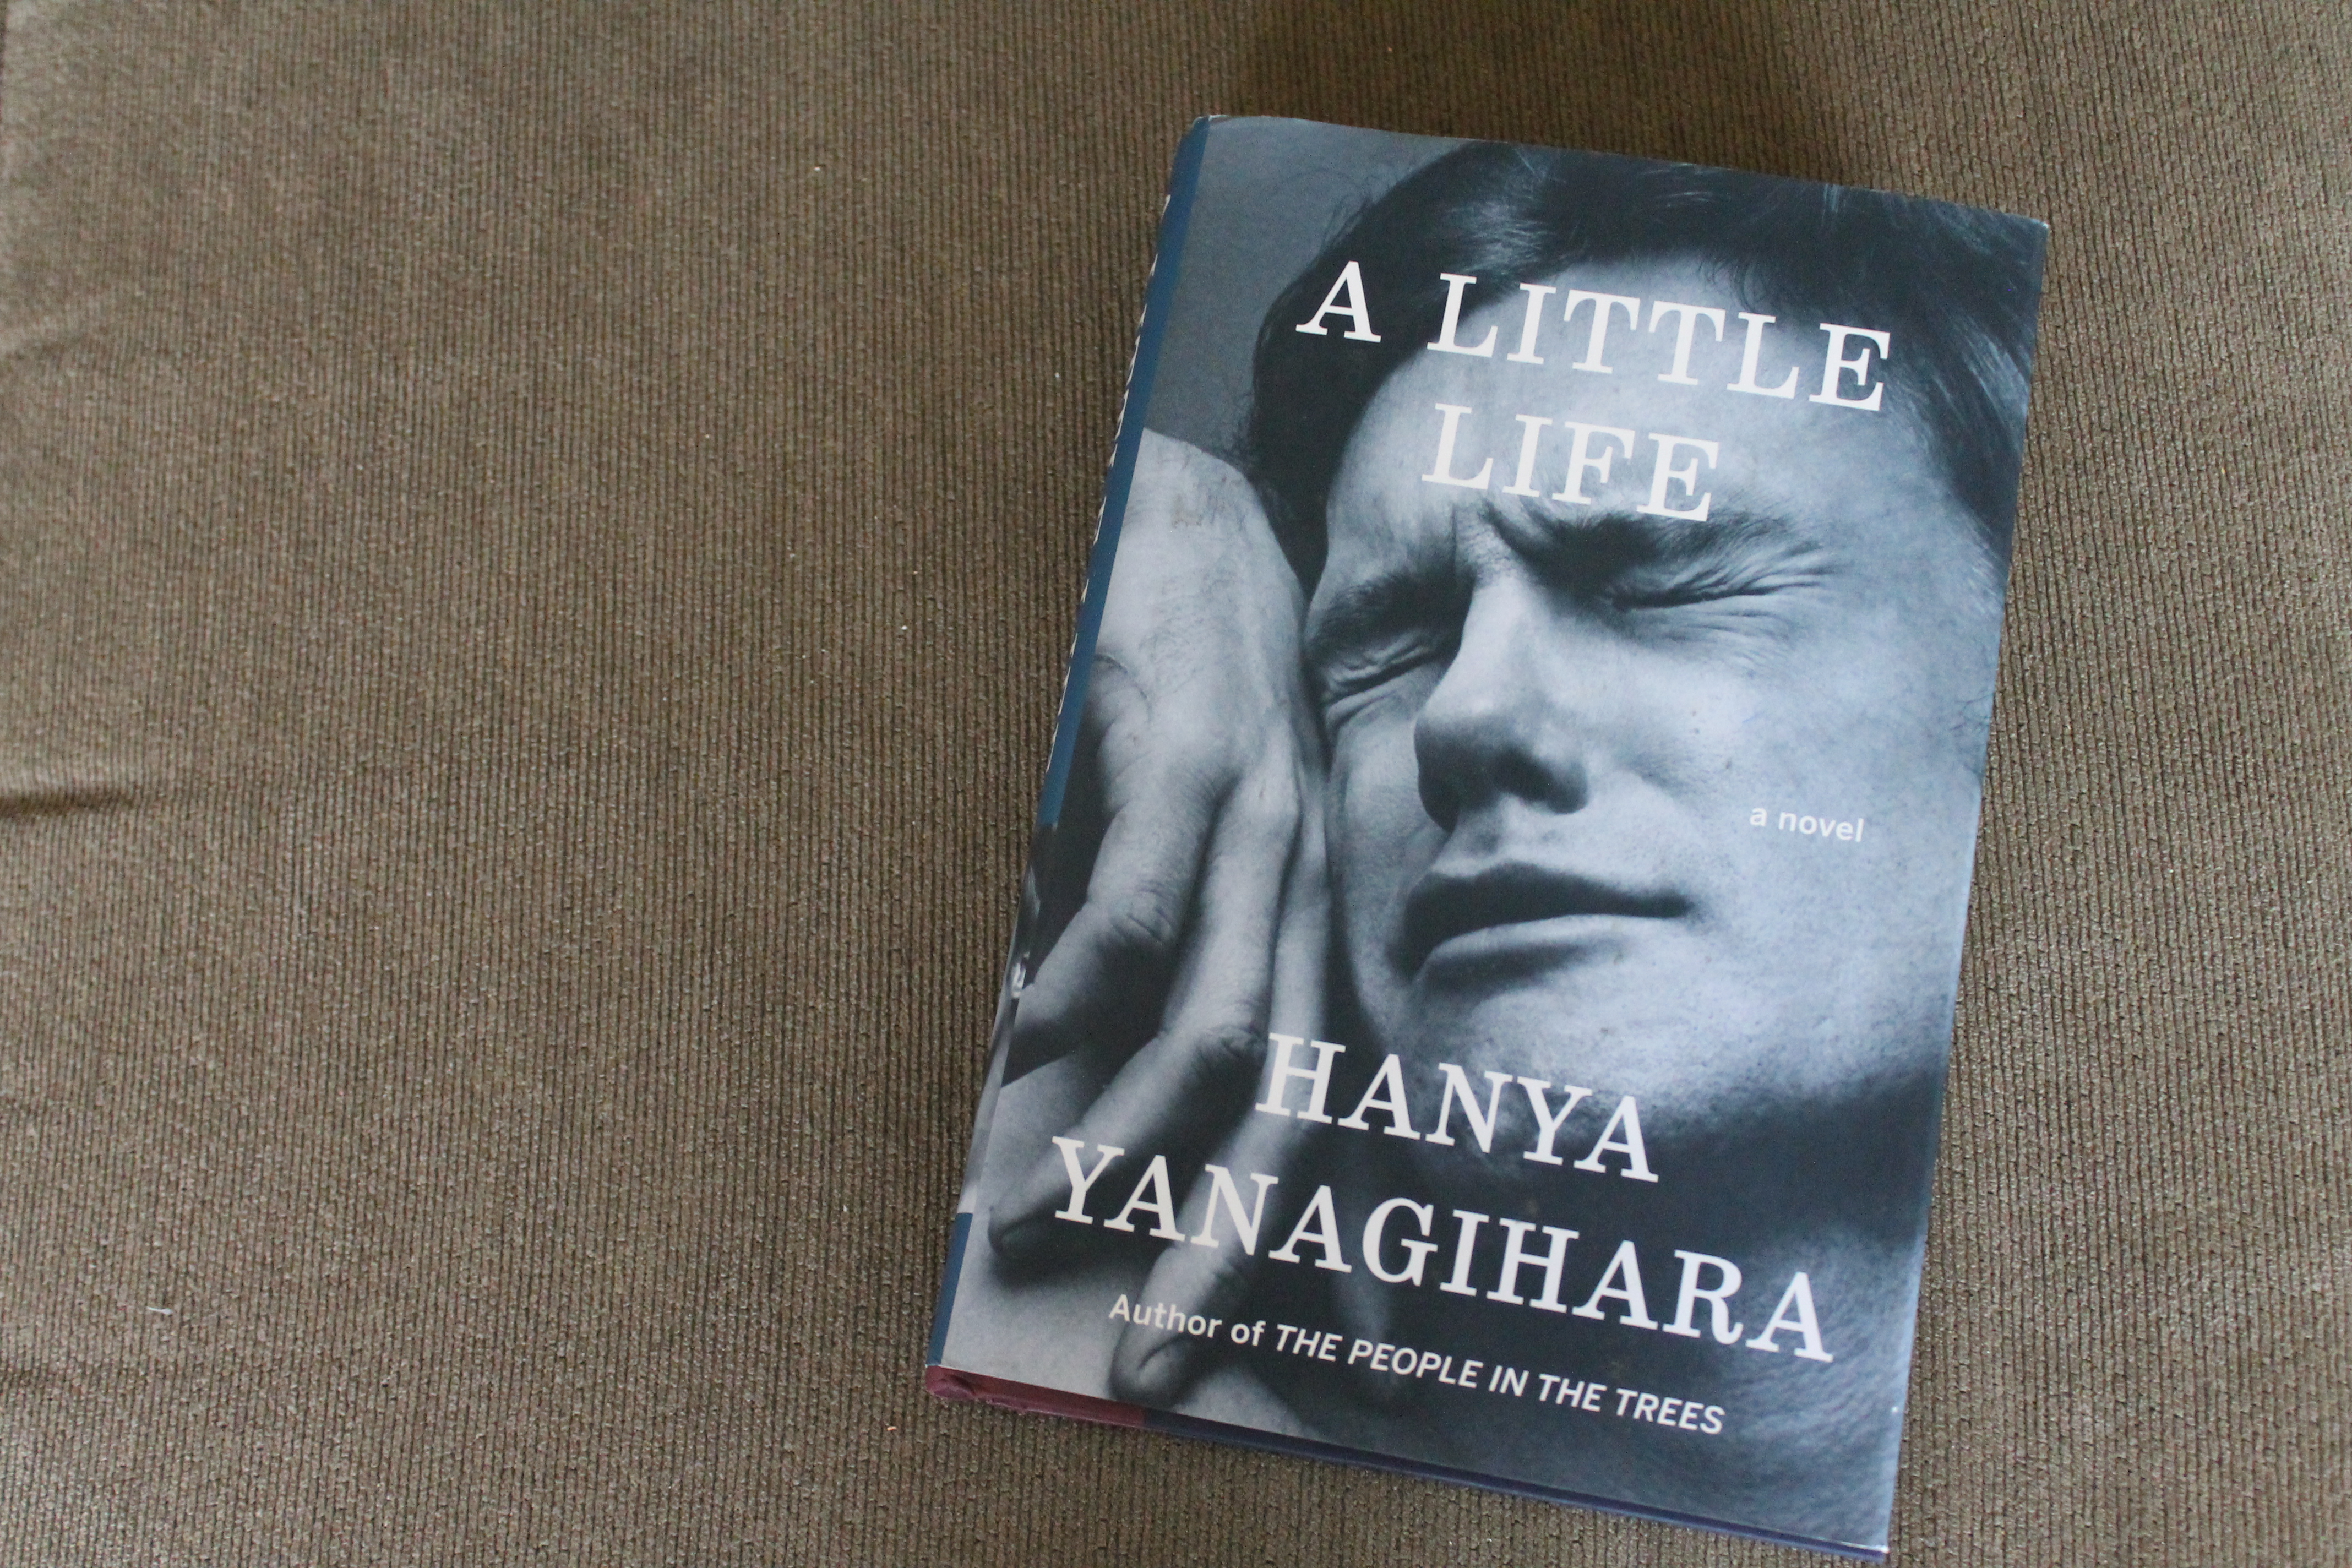 Little life book. A little Life hanya Yanagihara.